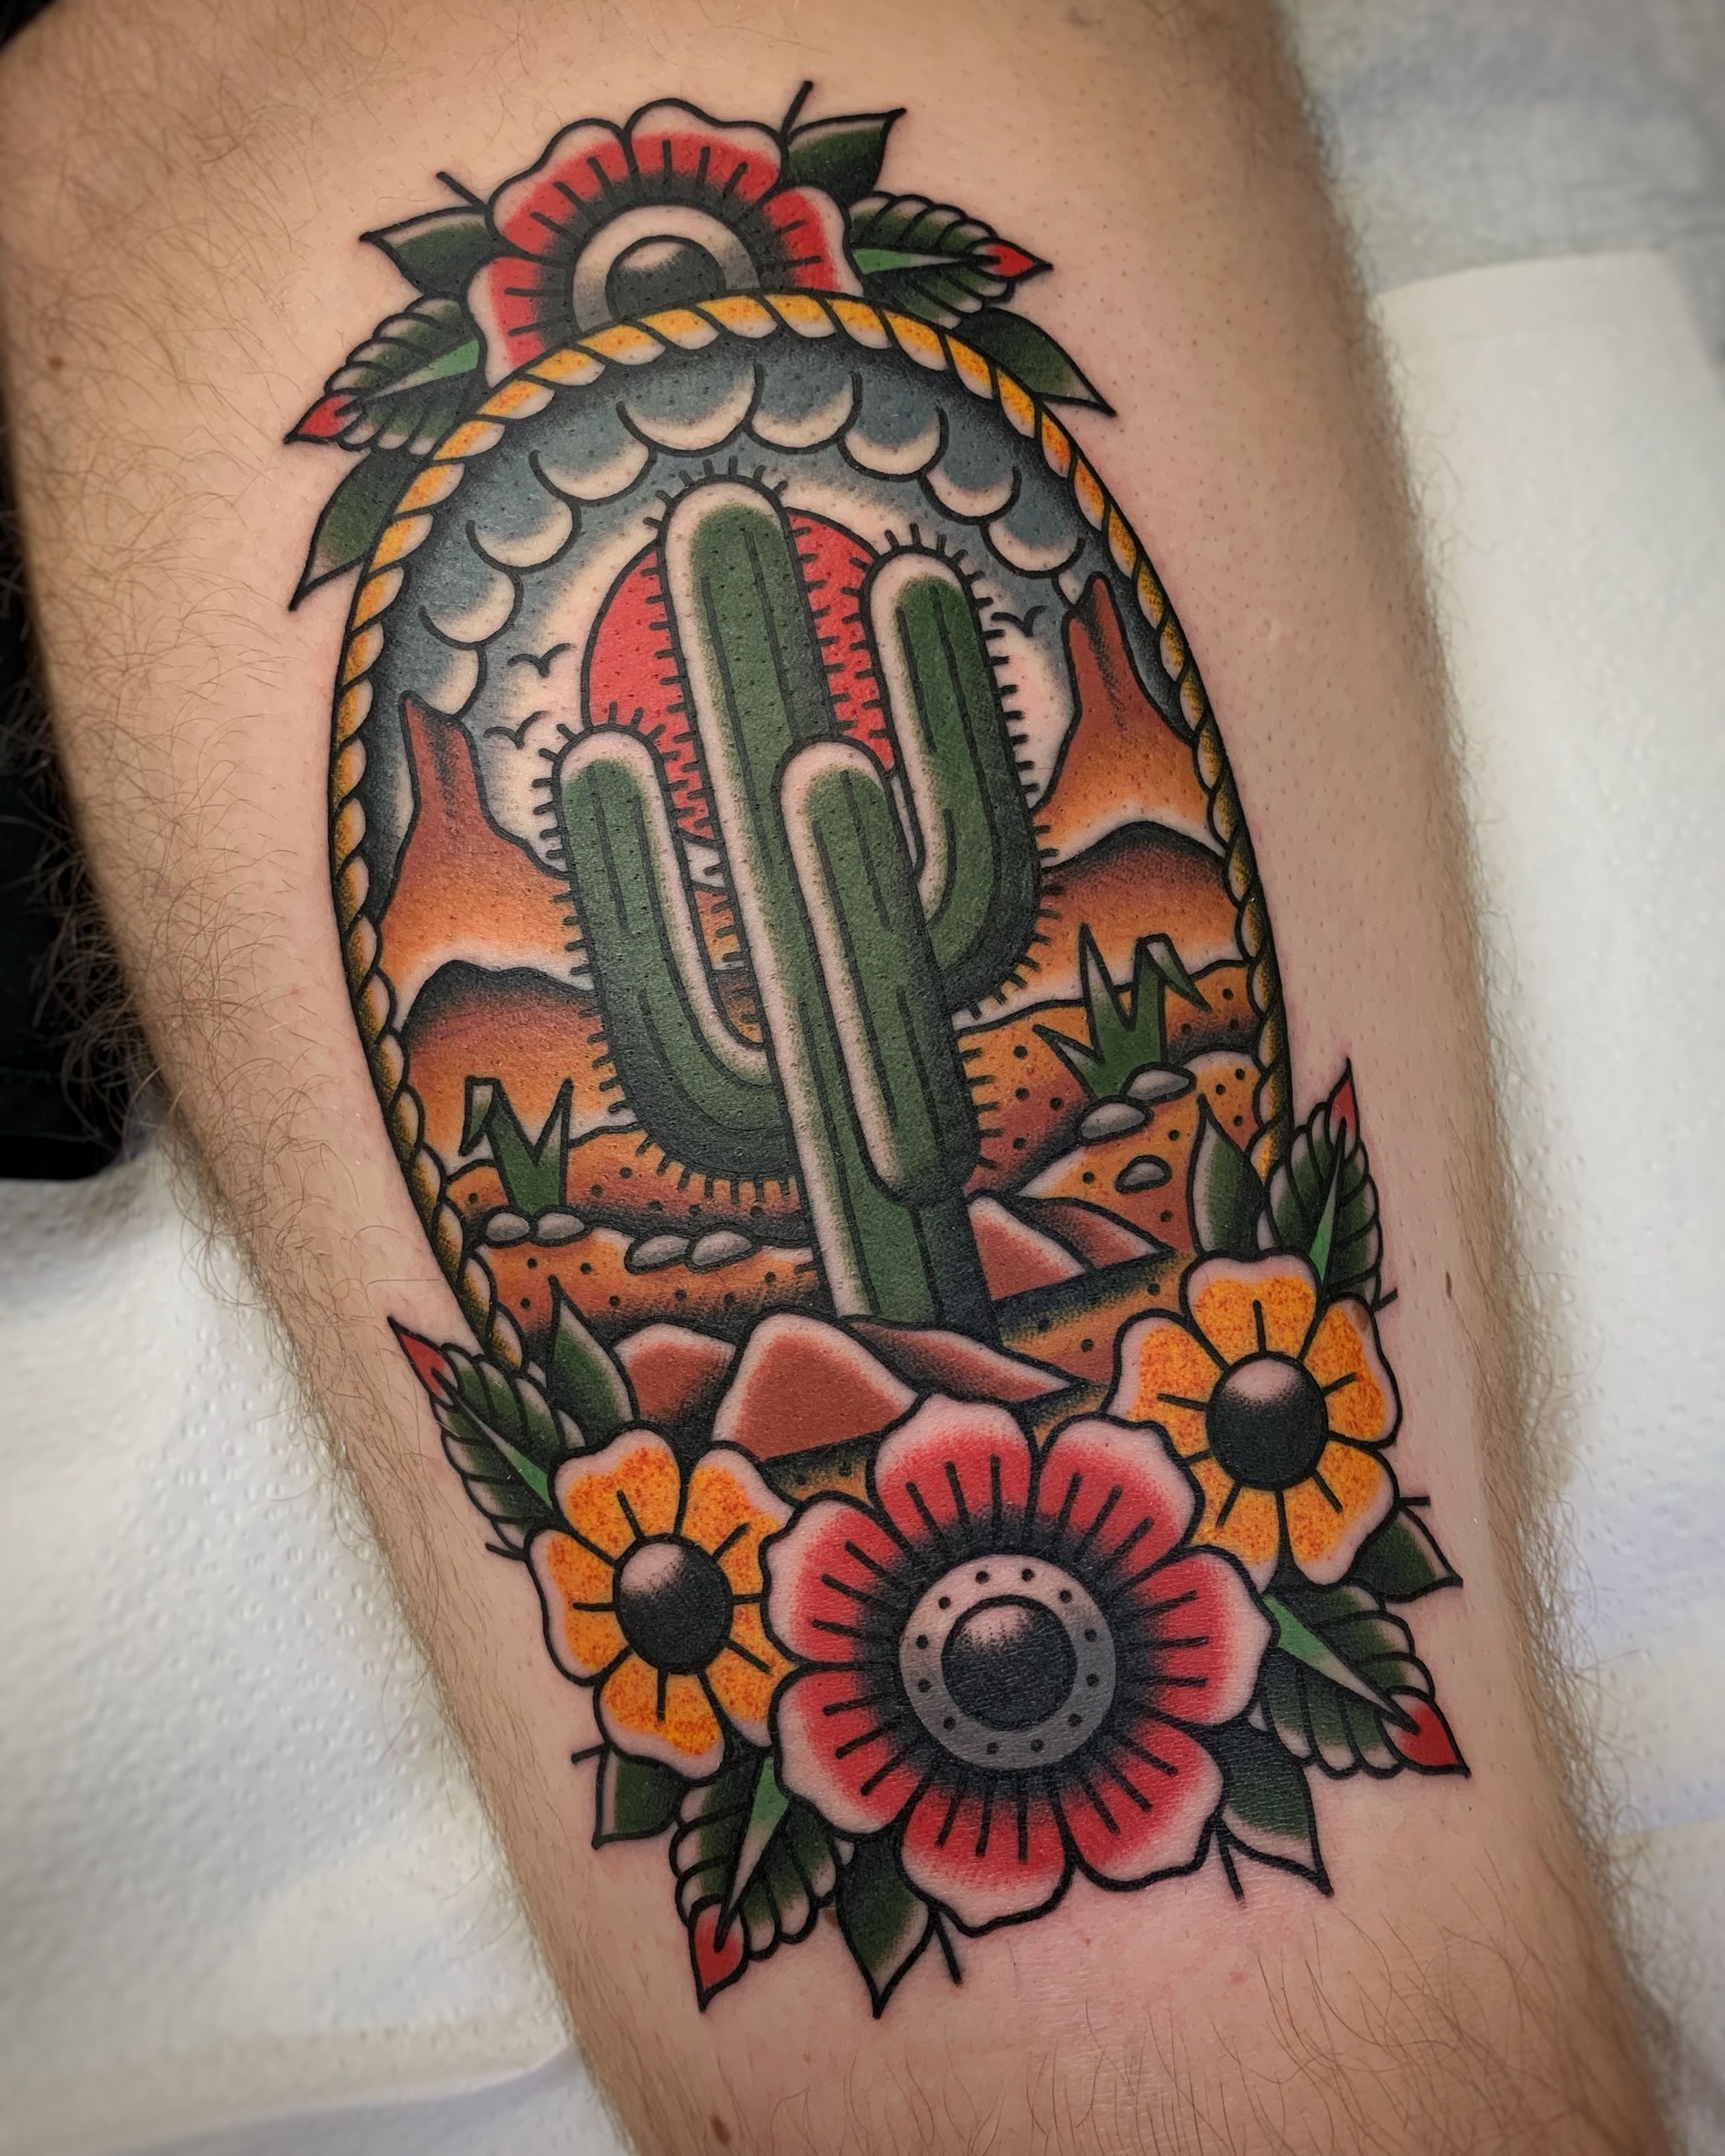 Arizona desert scene tattooed on the upper arm